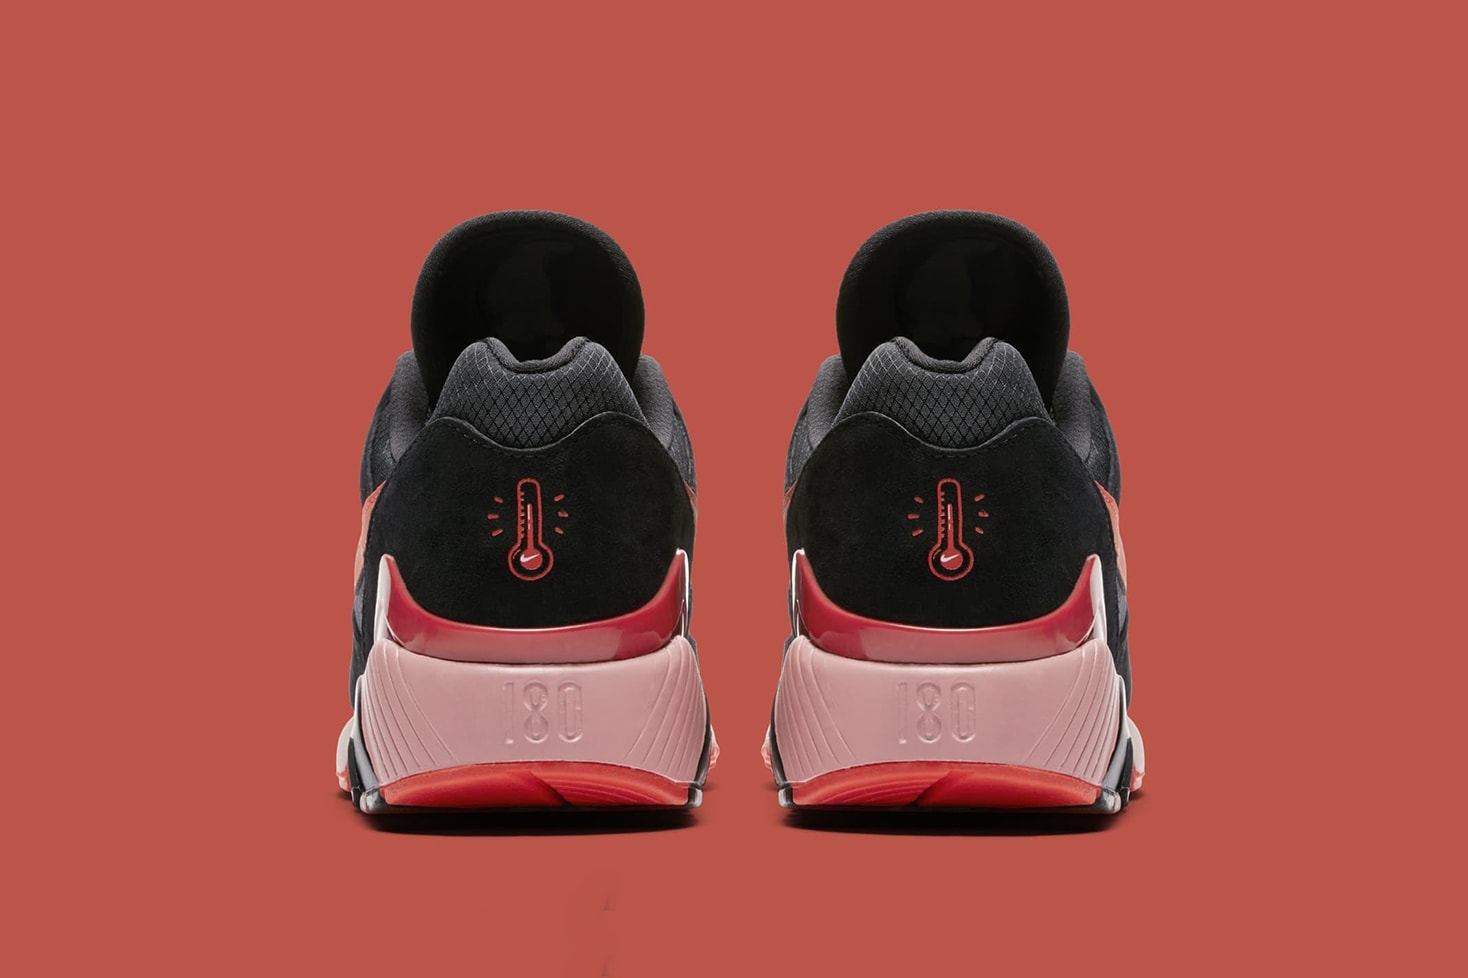 Nike Air Max 180 Team Orange University Red black release info sneakers